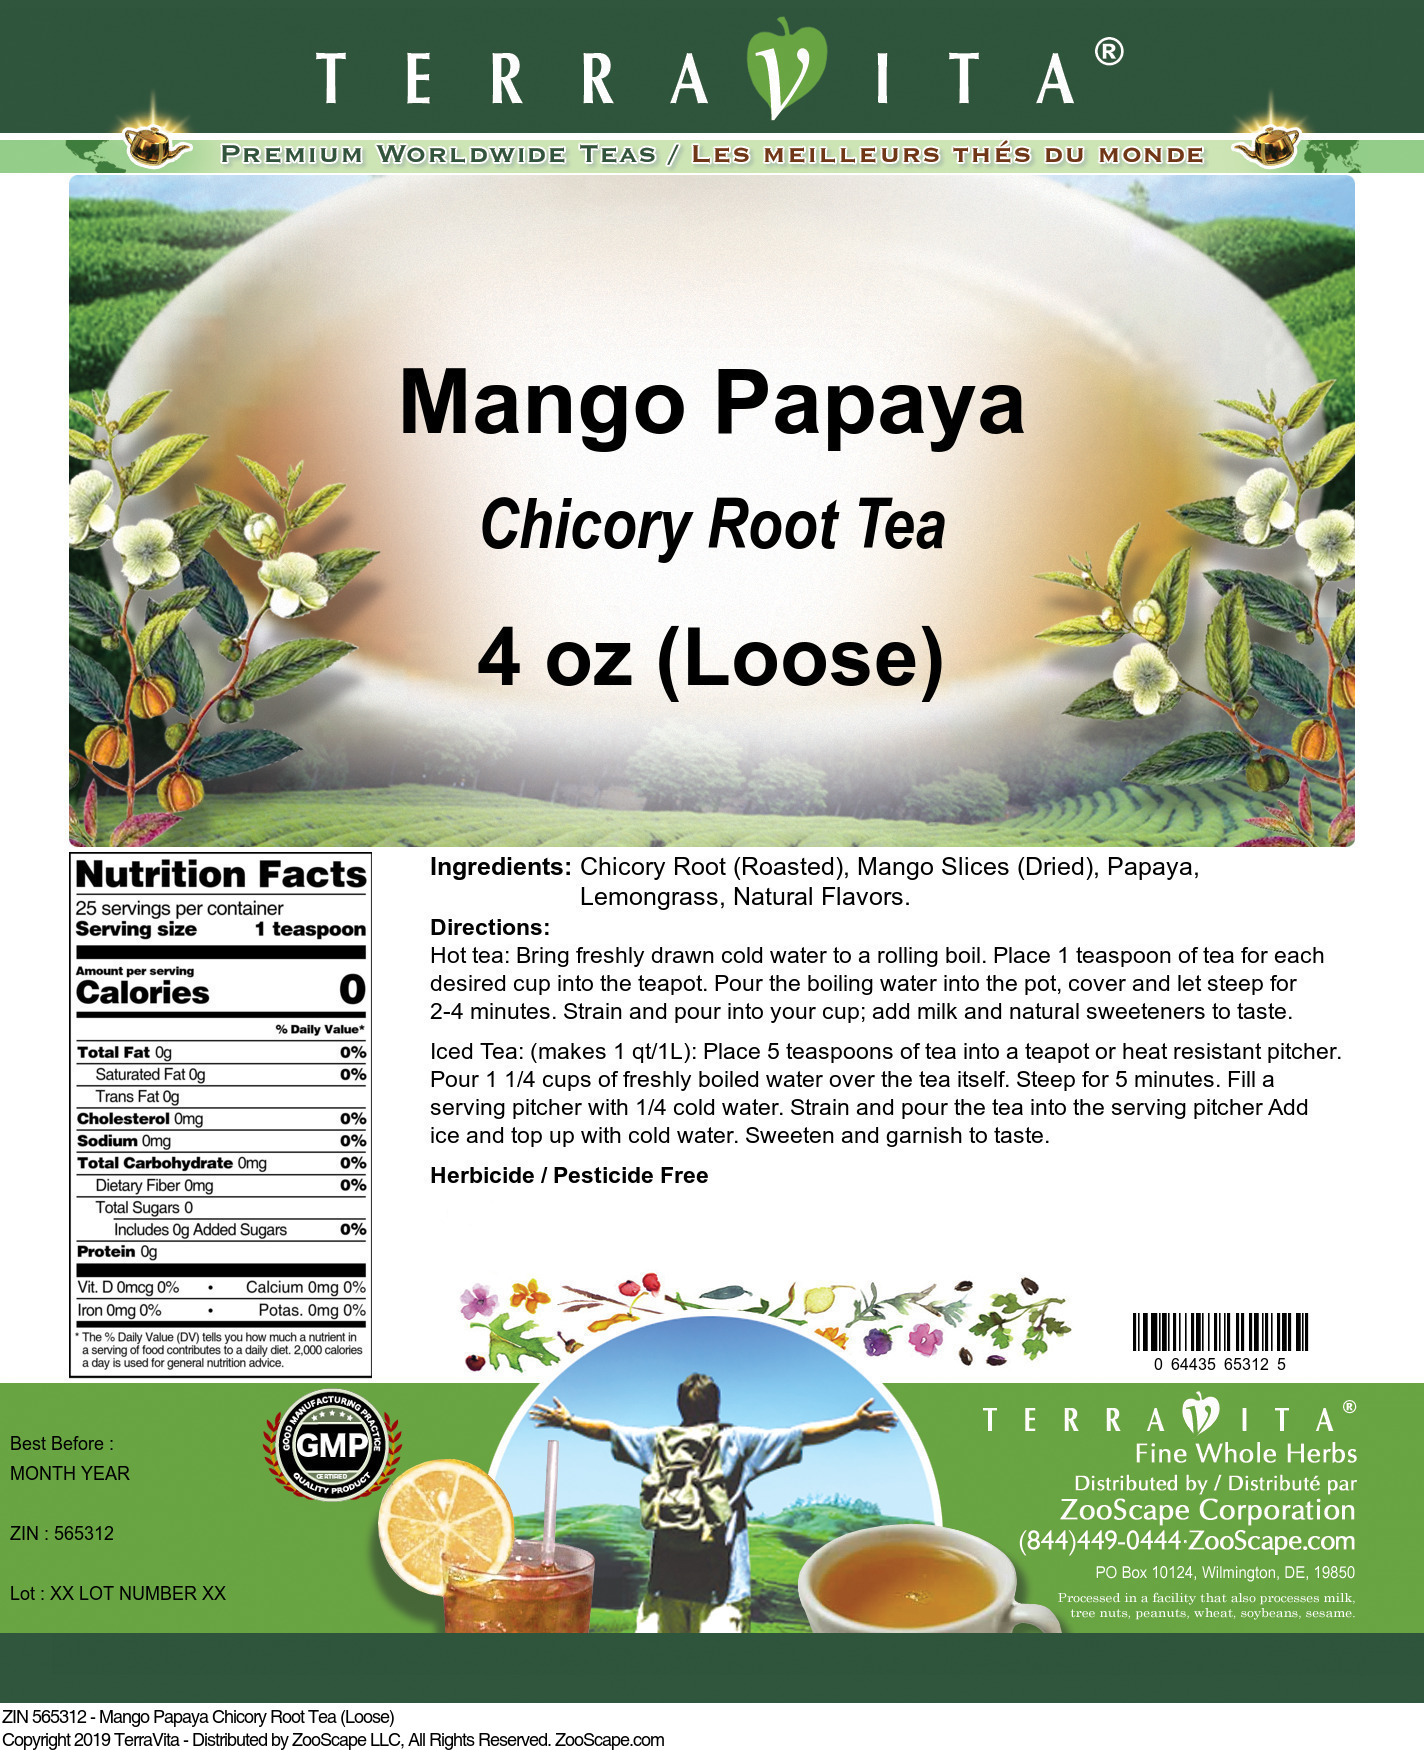 Mango Papaya Chicory Root Tea (Loose) - Label